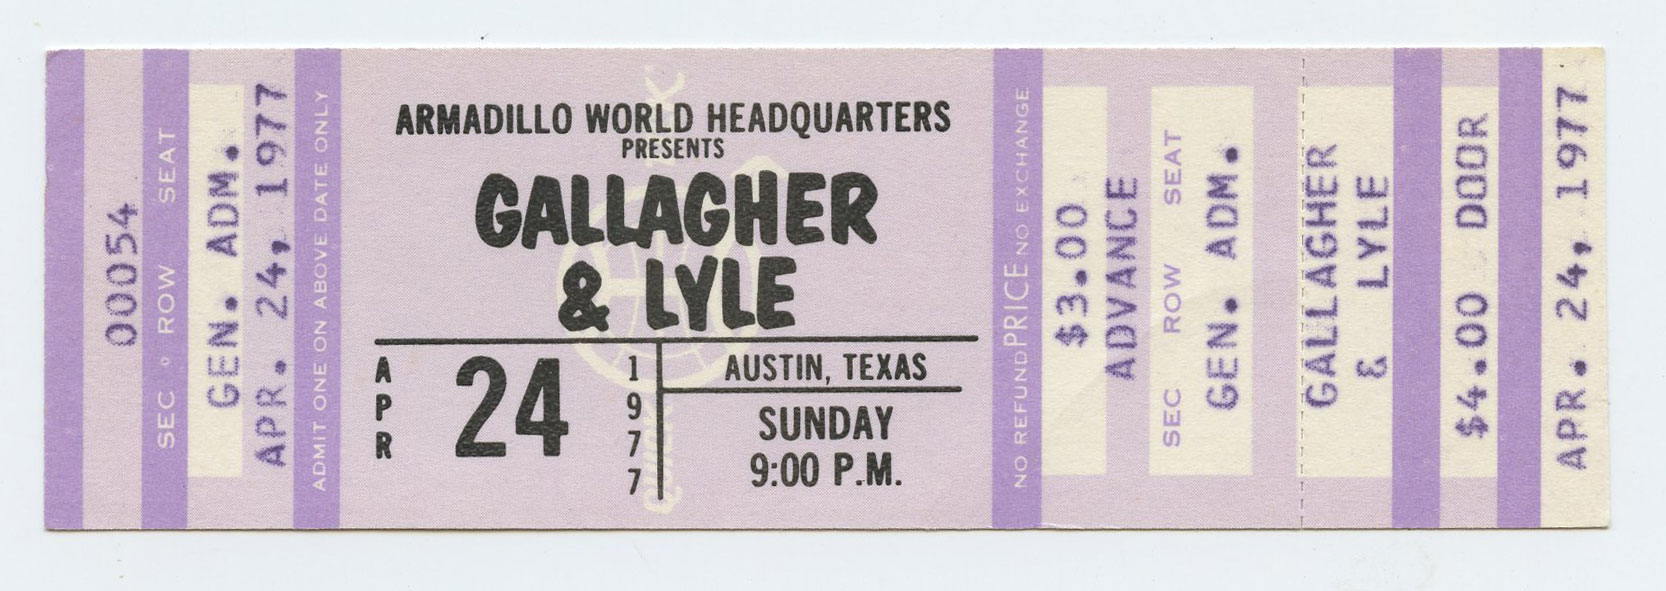 Gallagher and Lyle Vintage Ticket 1977 Apr 24 Austin TX 